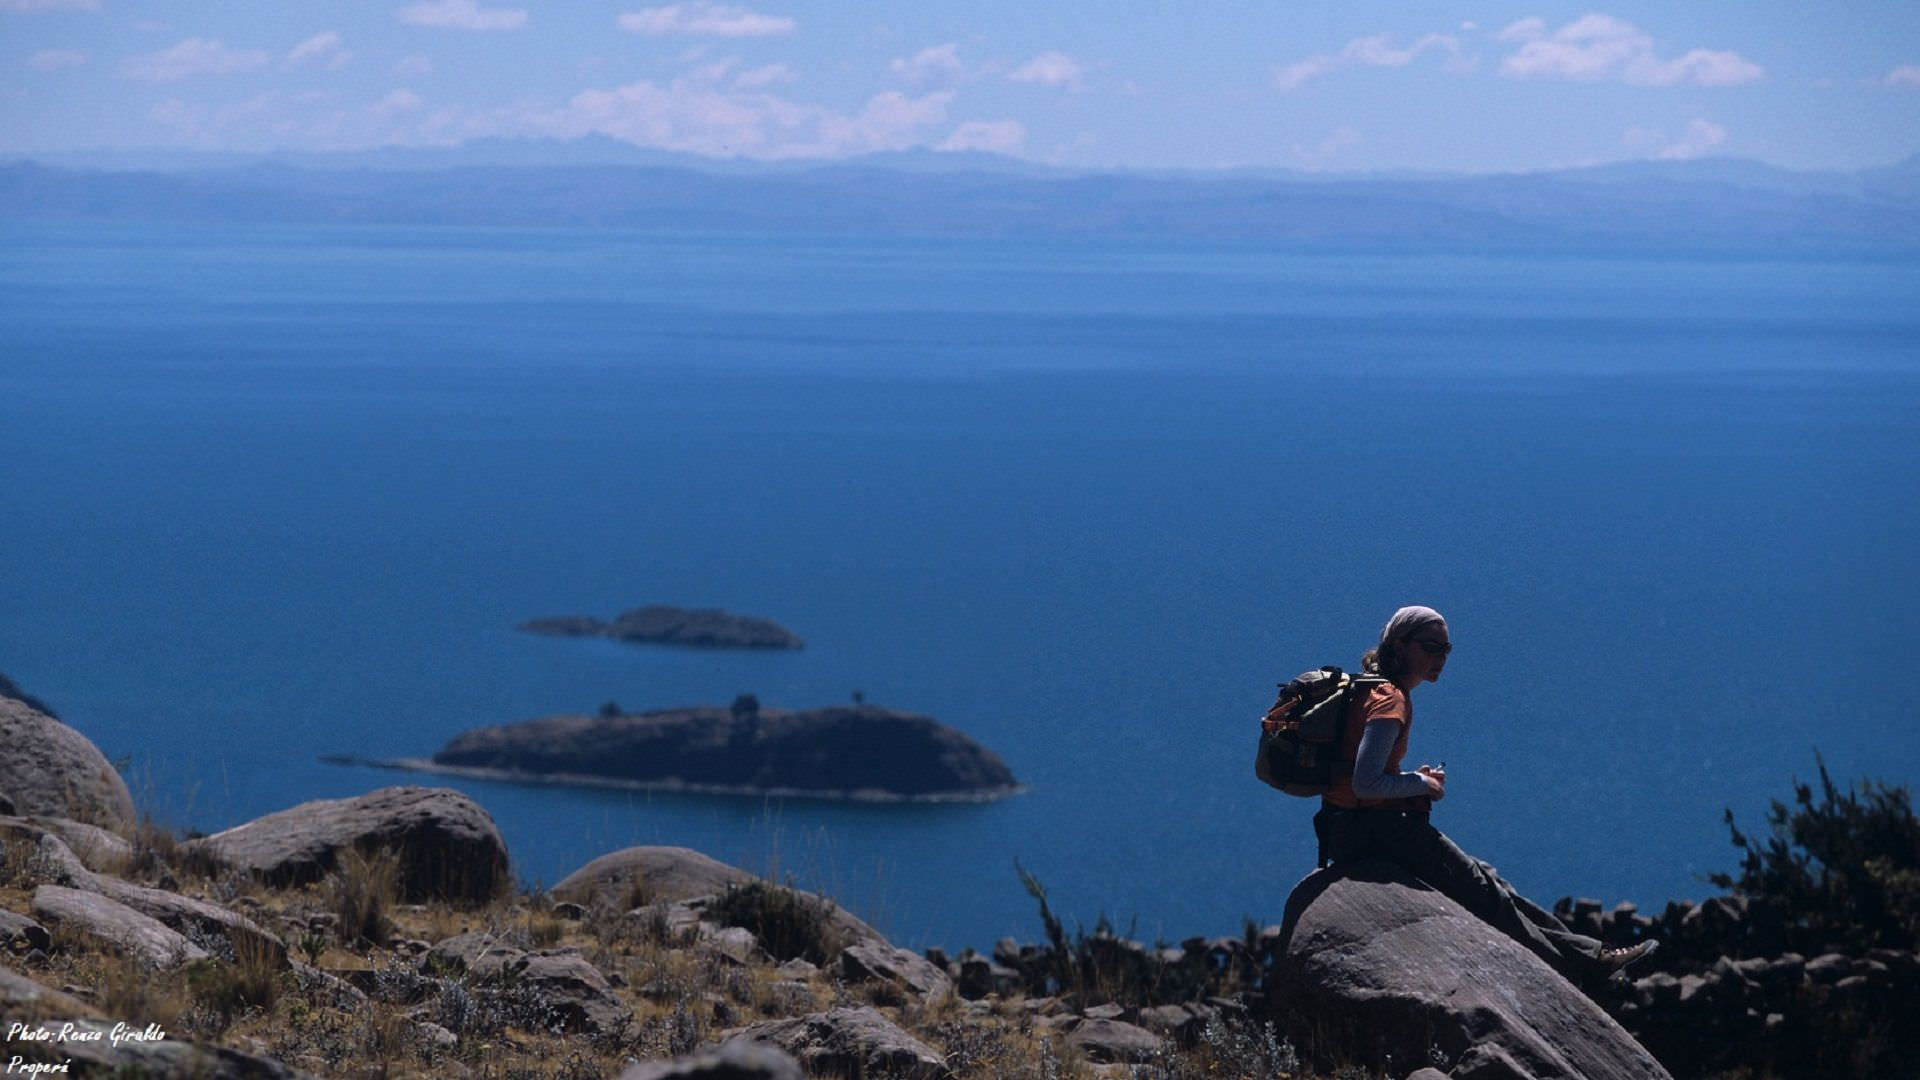 Lake Titicaca 2-Day Tour